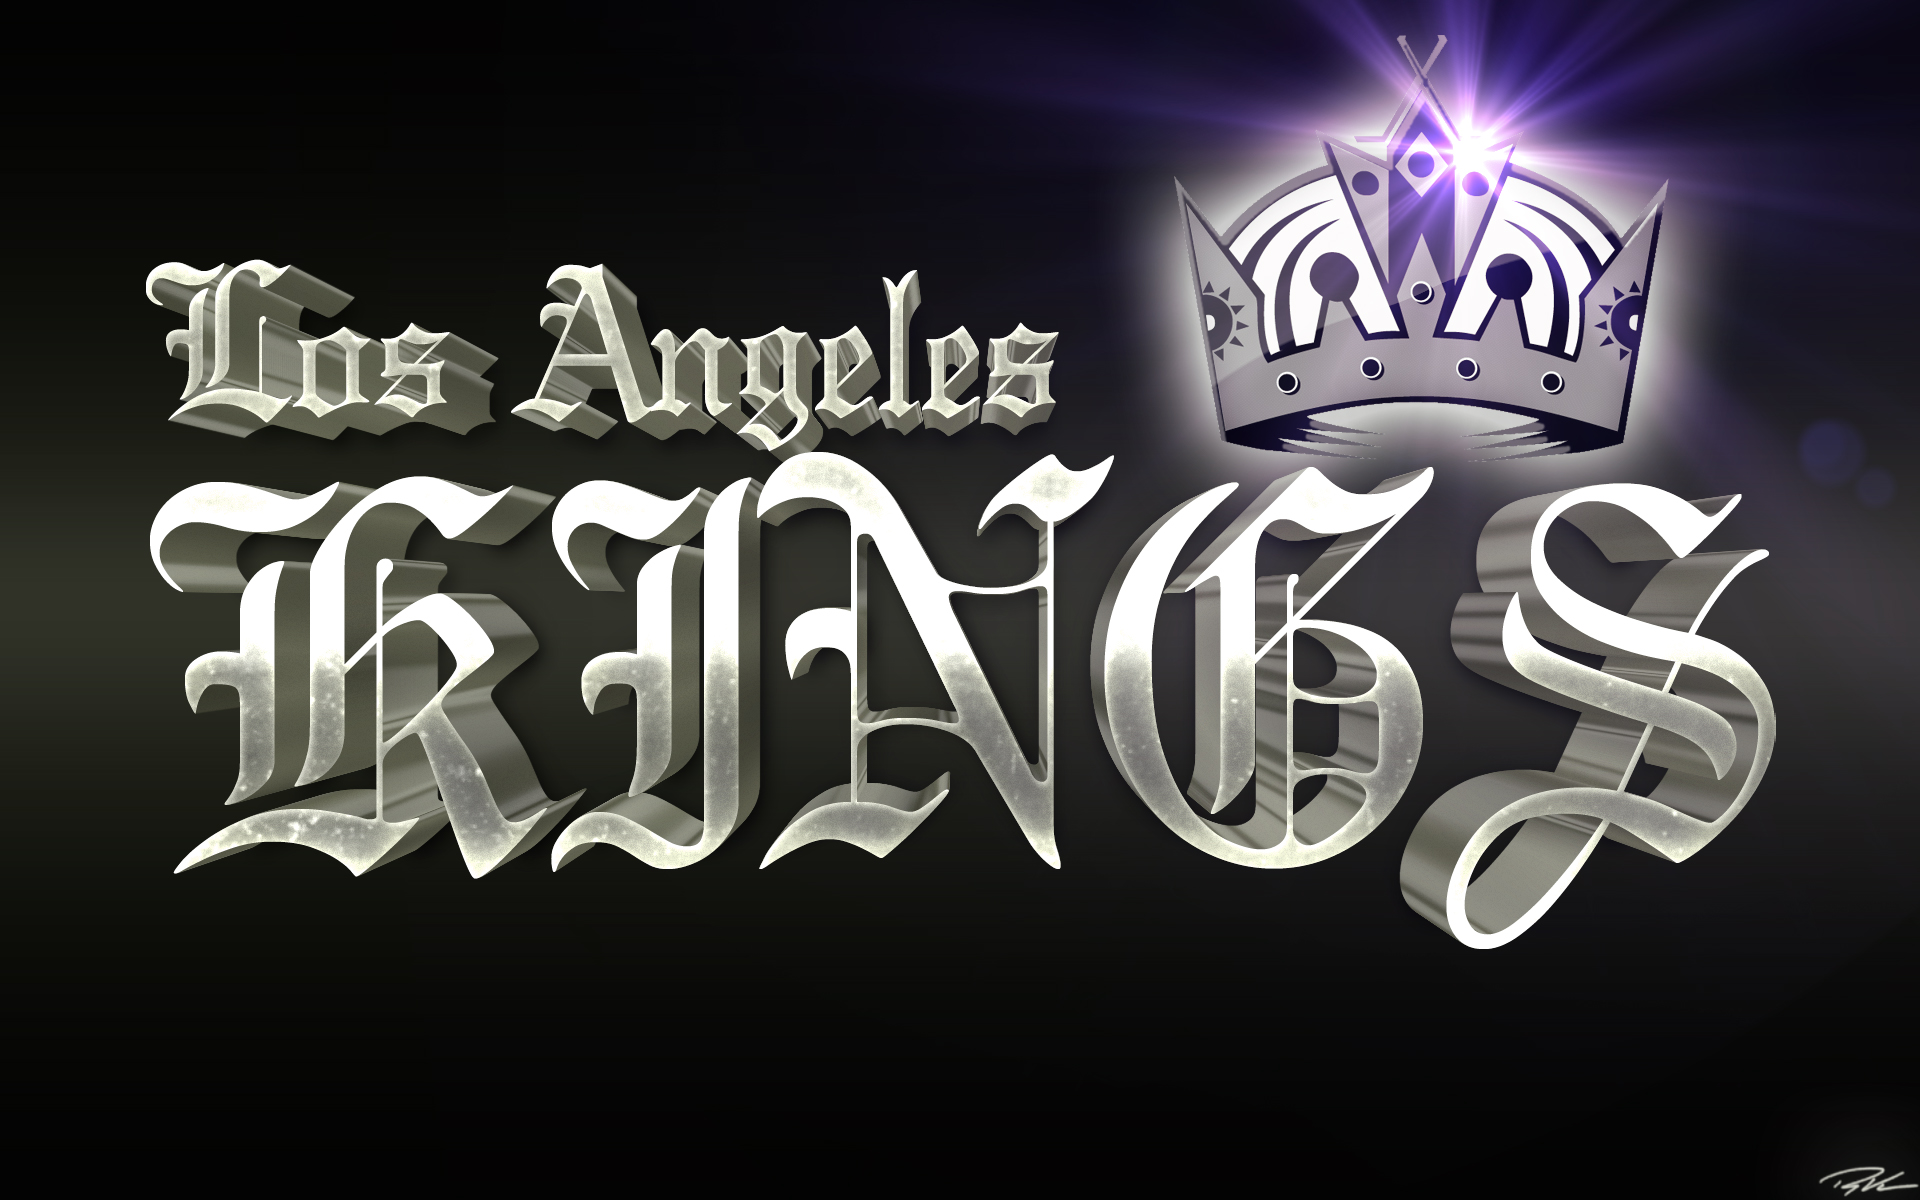 Los Angeles Kings Wallpaper Background